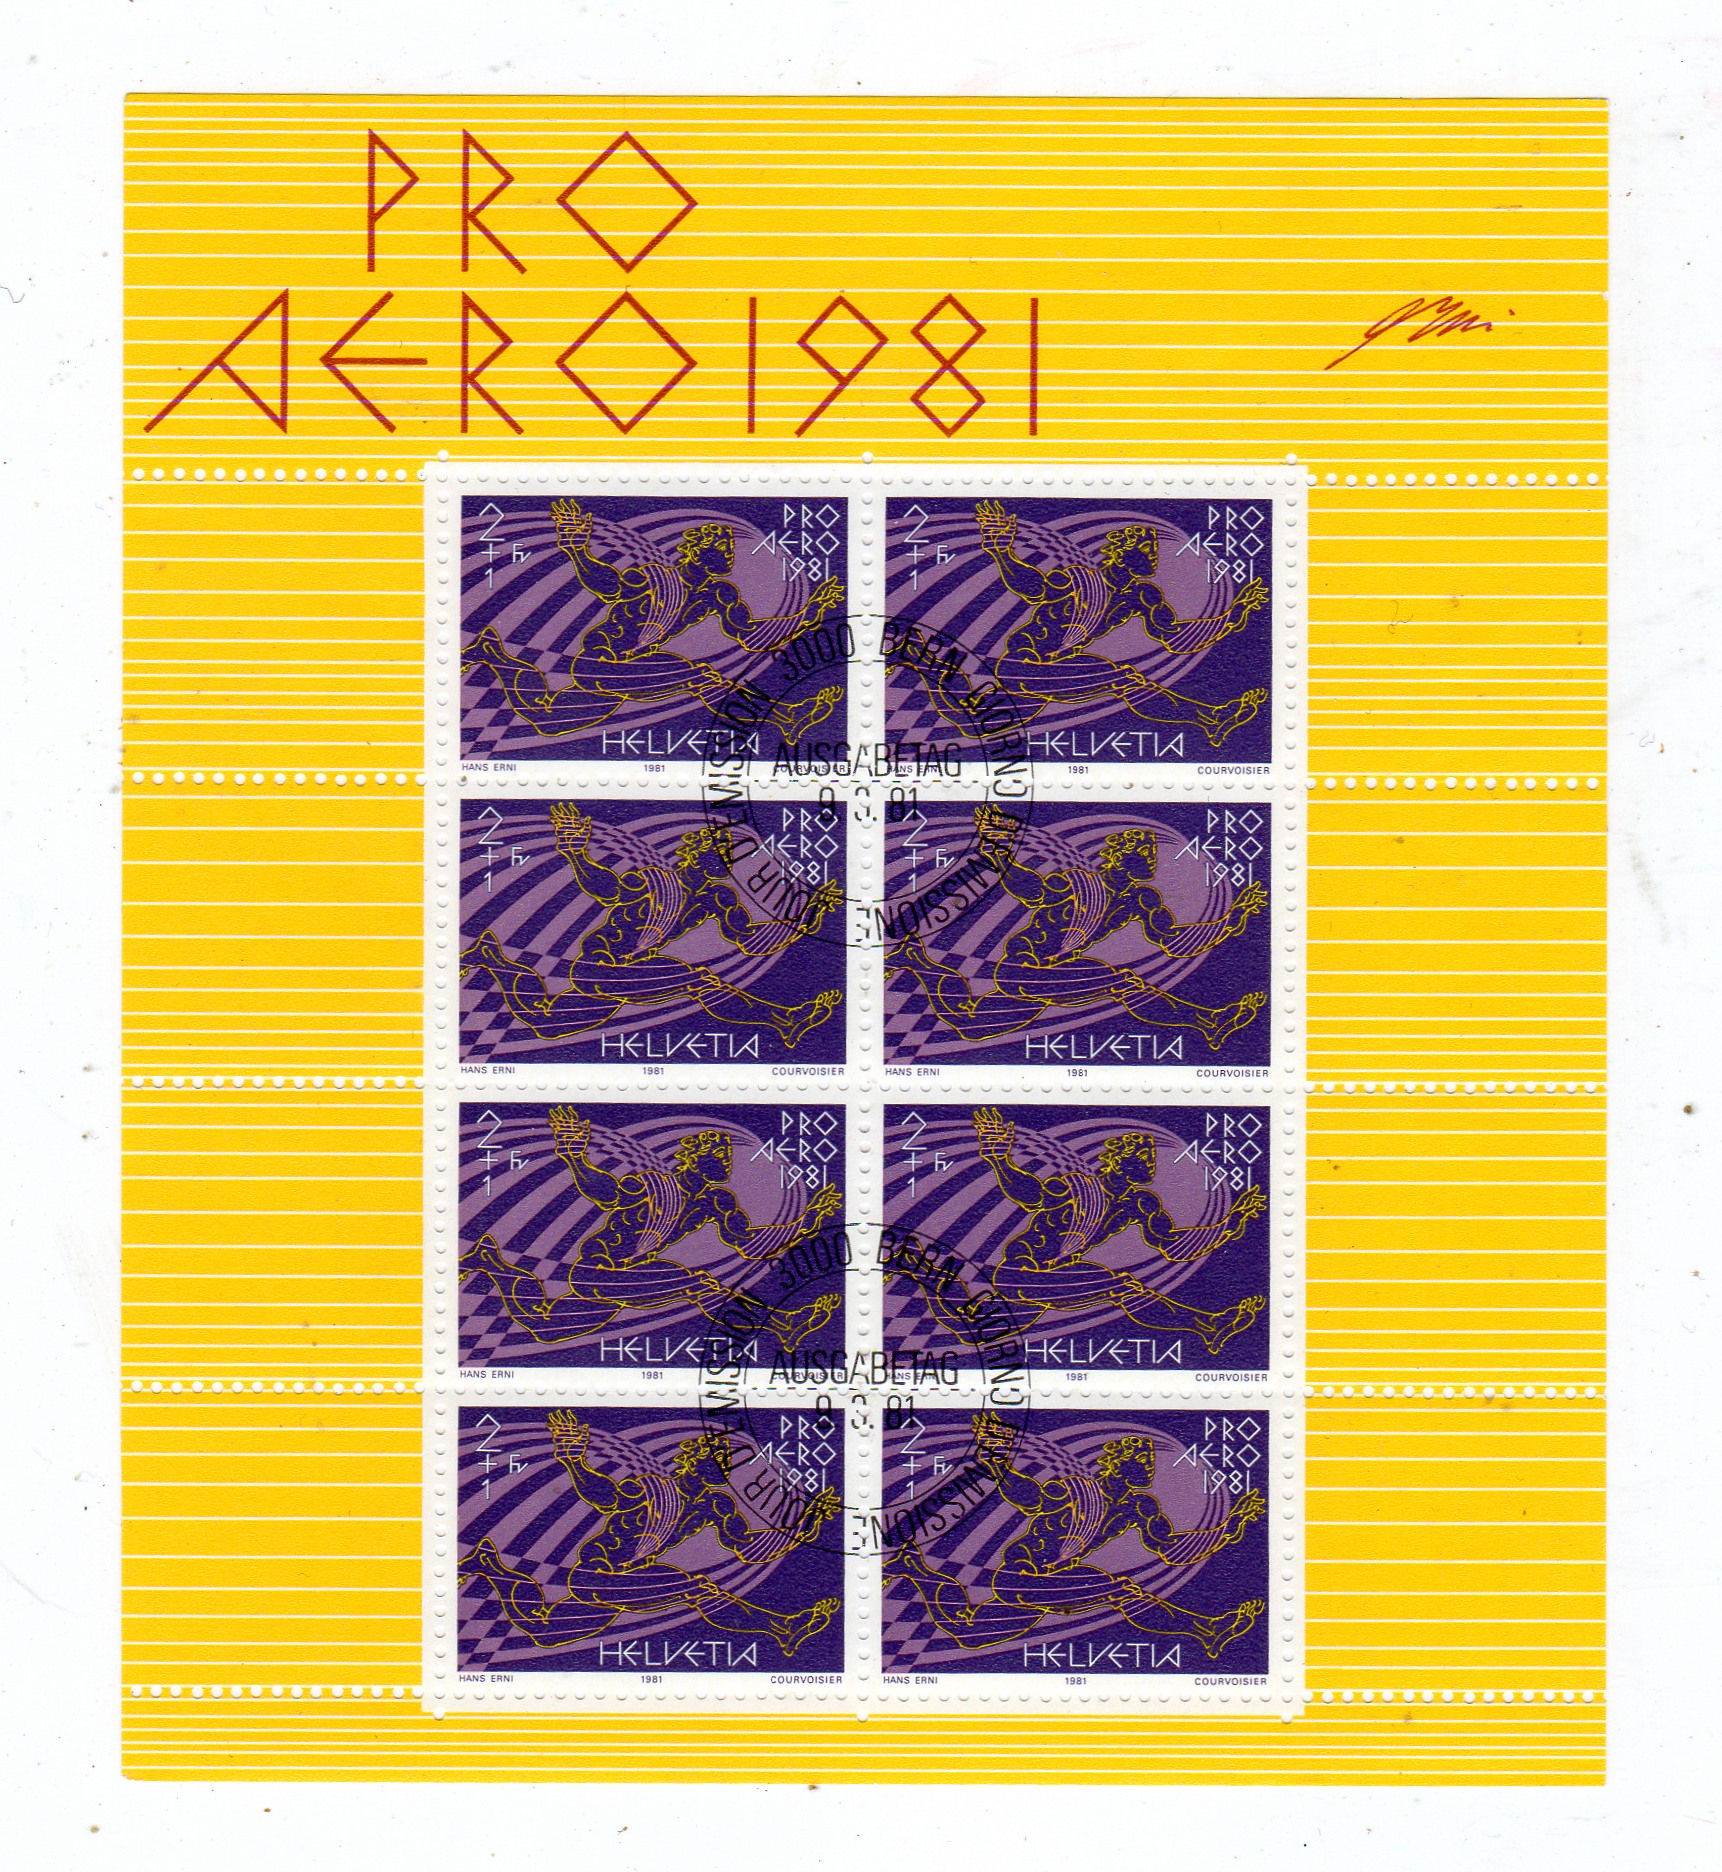 Pro Aeoro 1981 nr 1181 o kat Nkr 240